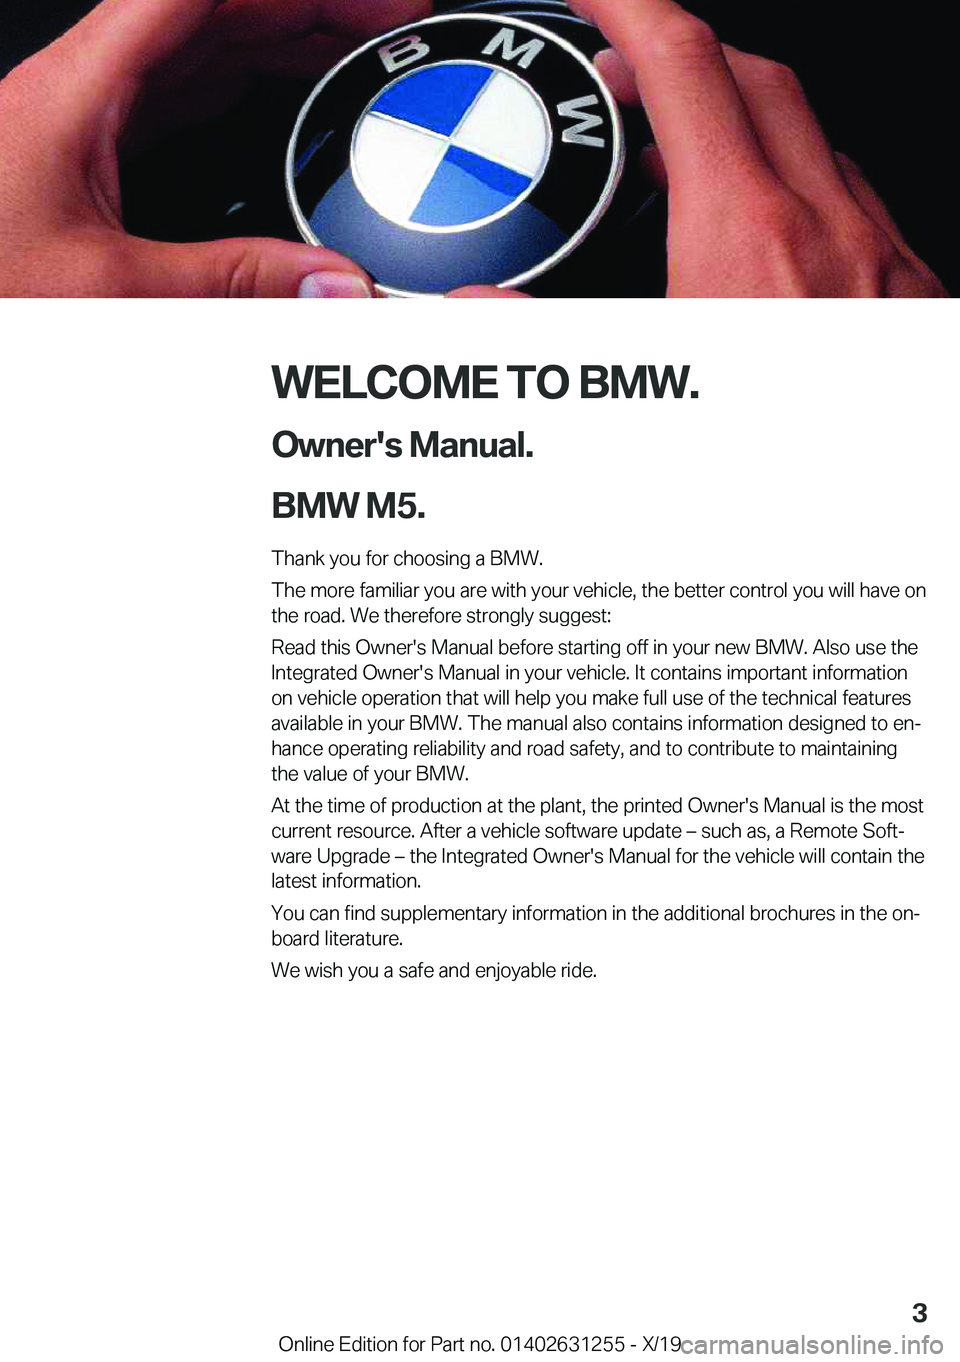 BMW M5 2020  Owners Manual �W�E�L�C�O�M�E��T�O��B�M�W�.�O�w�n�e�r�'�s��M�a�n�u�a�l�.
�B�M�W��M�5�.
�T�h�a�n�k��y�o�u��f�o�r��c�h�o�o�s�i�n�g��a��B�M�W�. �T�h�e��m�o�r�e��f�a�m�i�l�i�a�r��y�o�u��a�r�e��w�i�t�h�